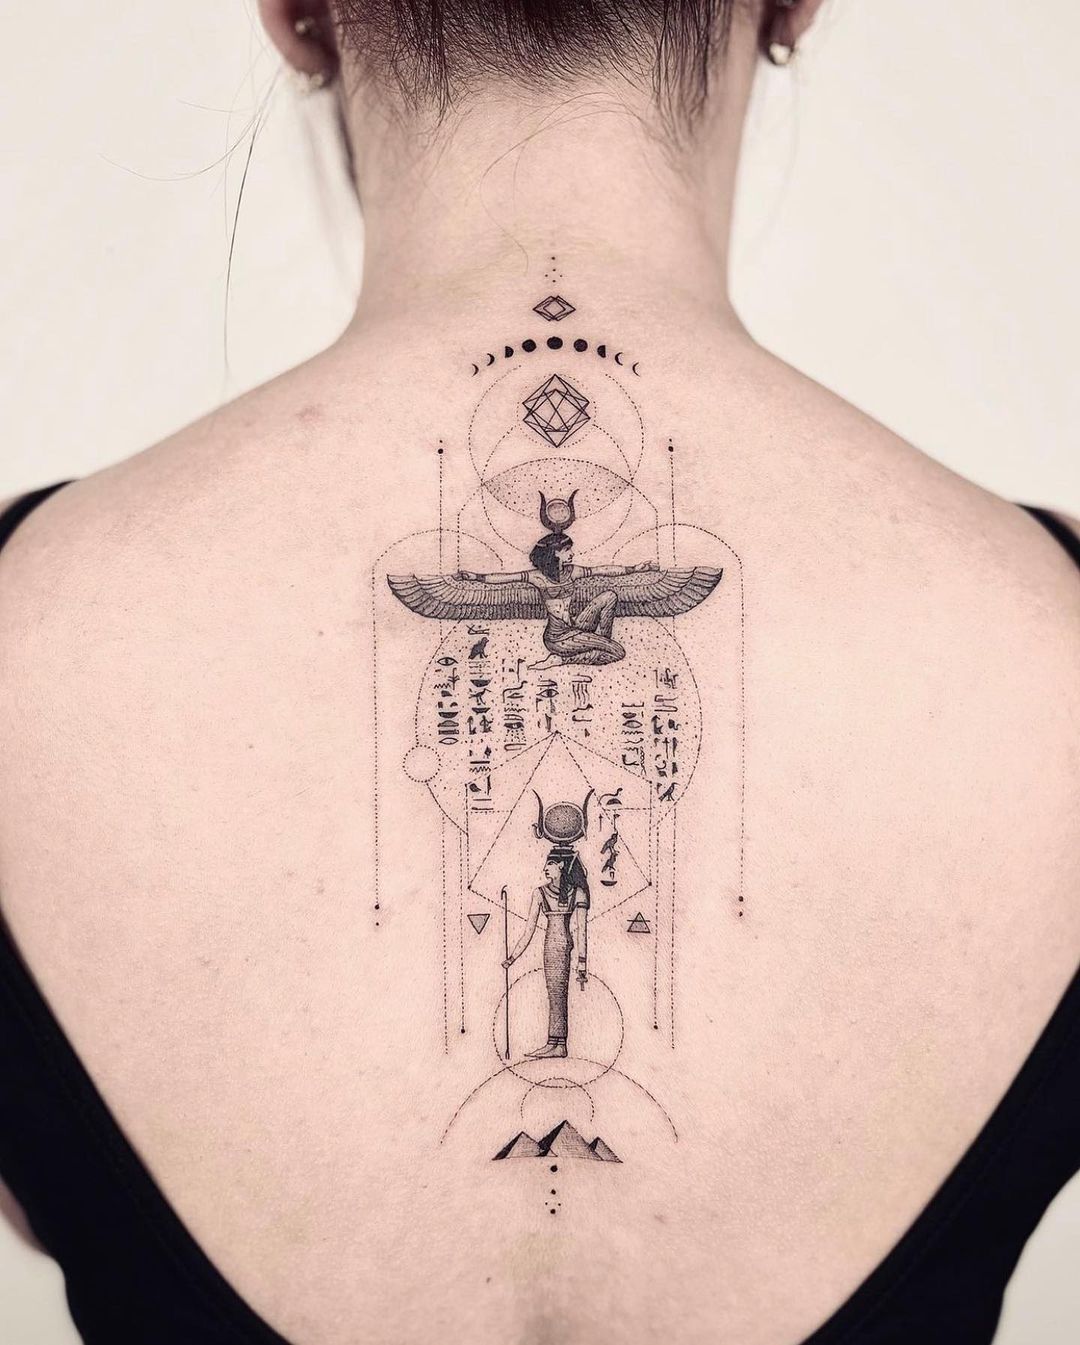 Dotwork Egyptian Tattoo on Back - Best Tattoo Ideas Gallery